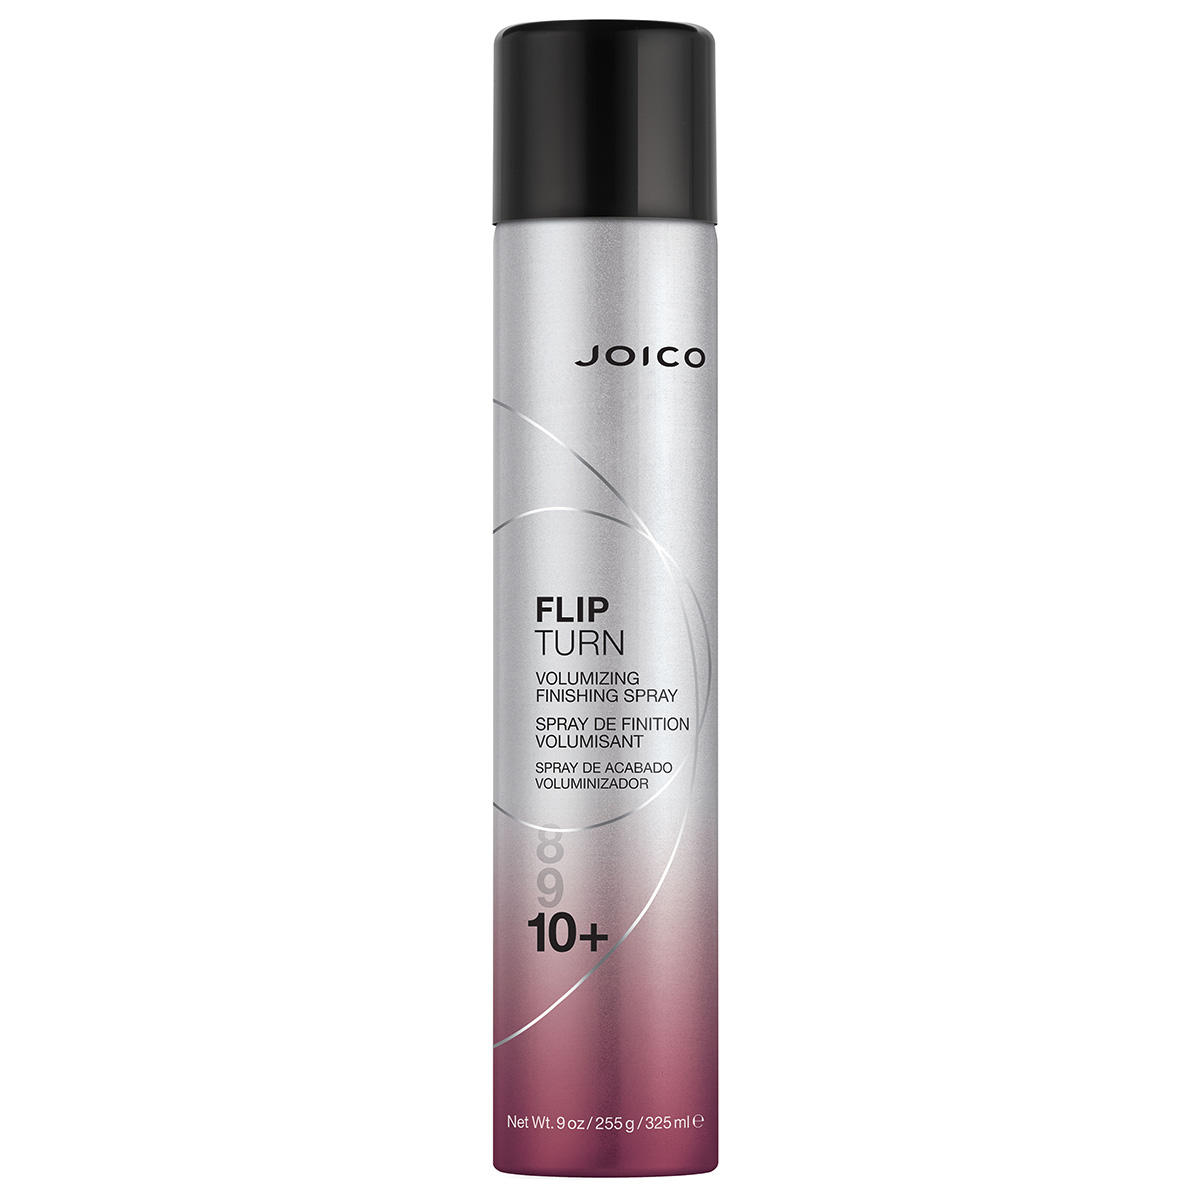 JOICO Flip Turn Volumizing Finishing Spray sehr starker Halt 325 ml - 1